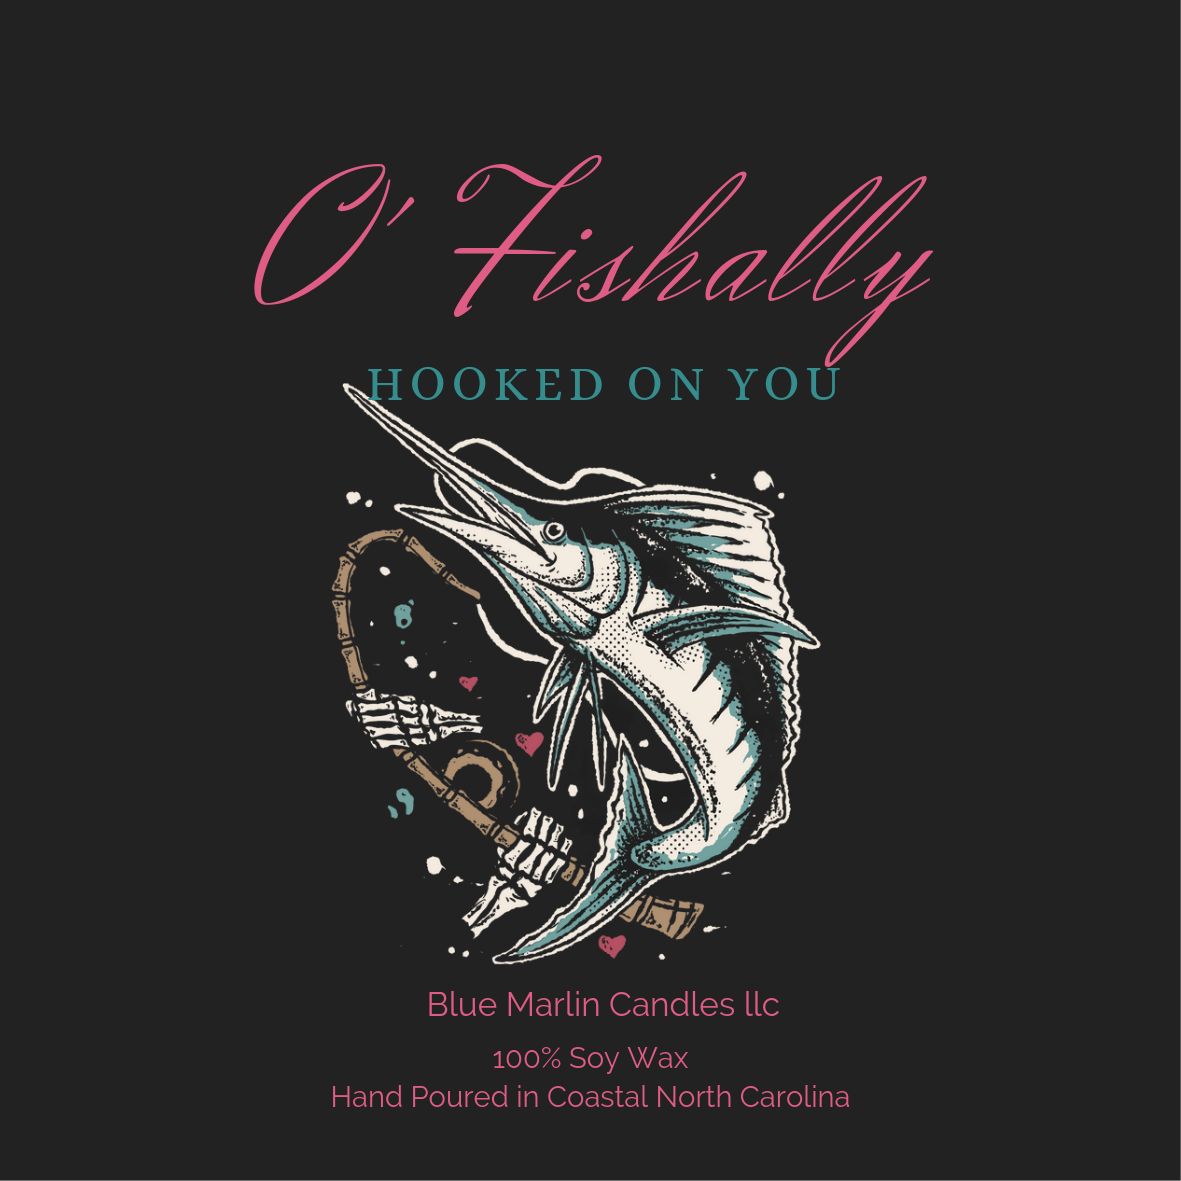 O'Fishally Hooked On You